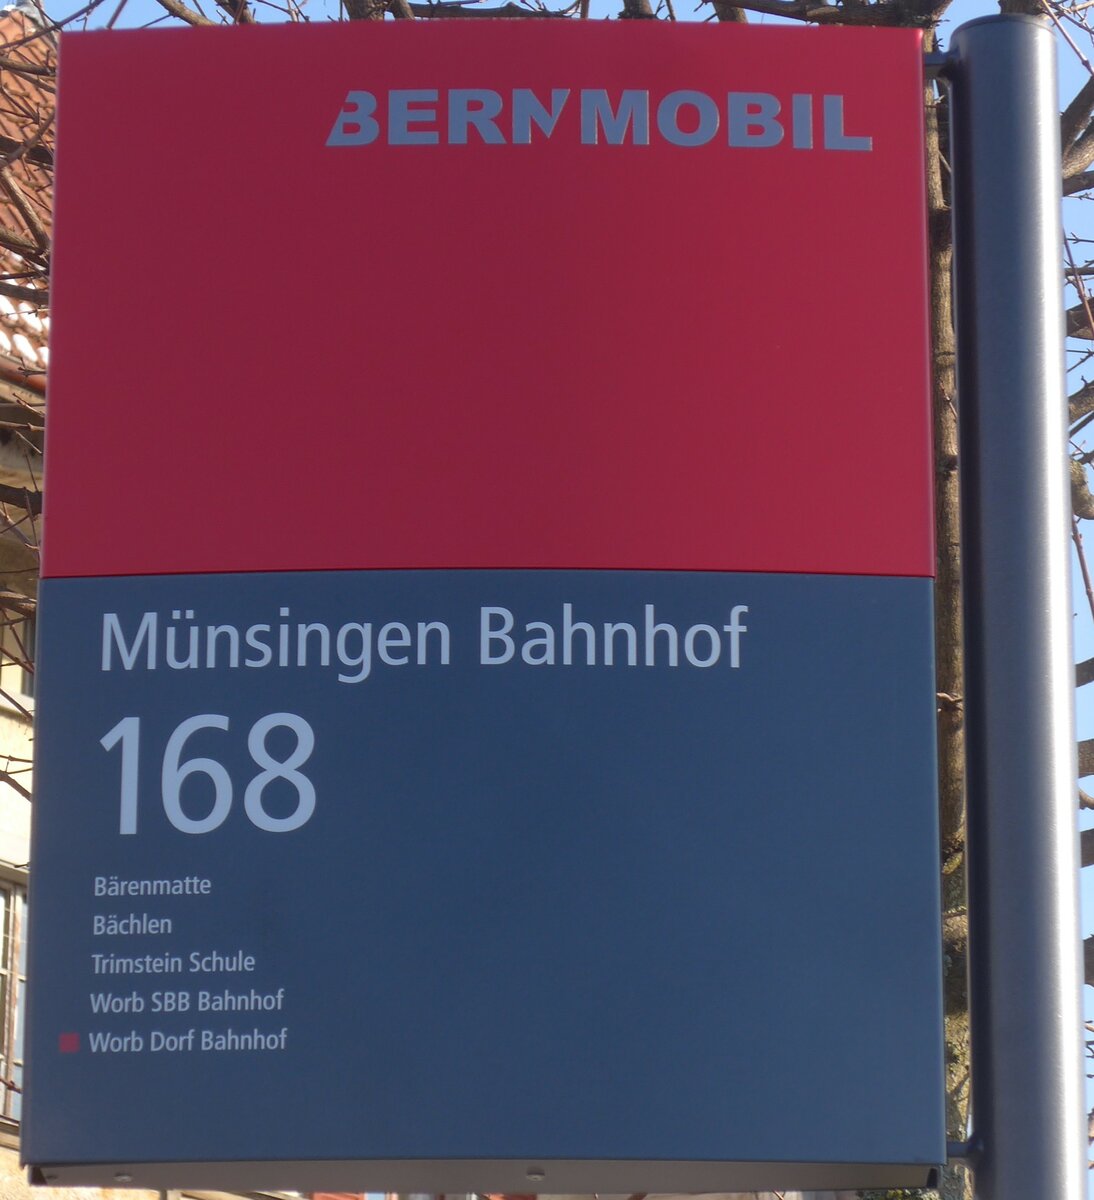 (201'473) - BERNMOBIL-Haltestellenschild - Mnsingen, Bahnhof - am 4. Februar 2019